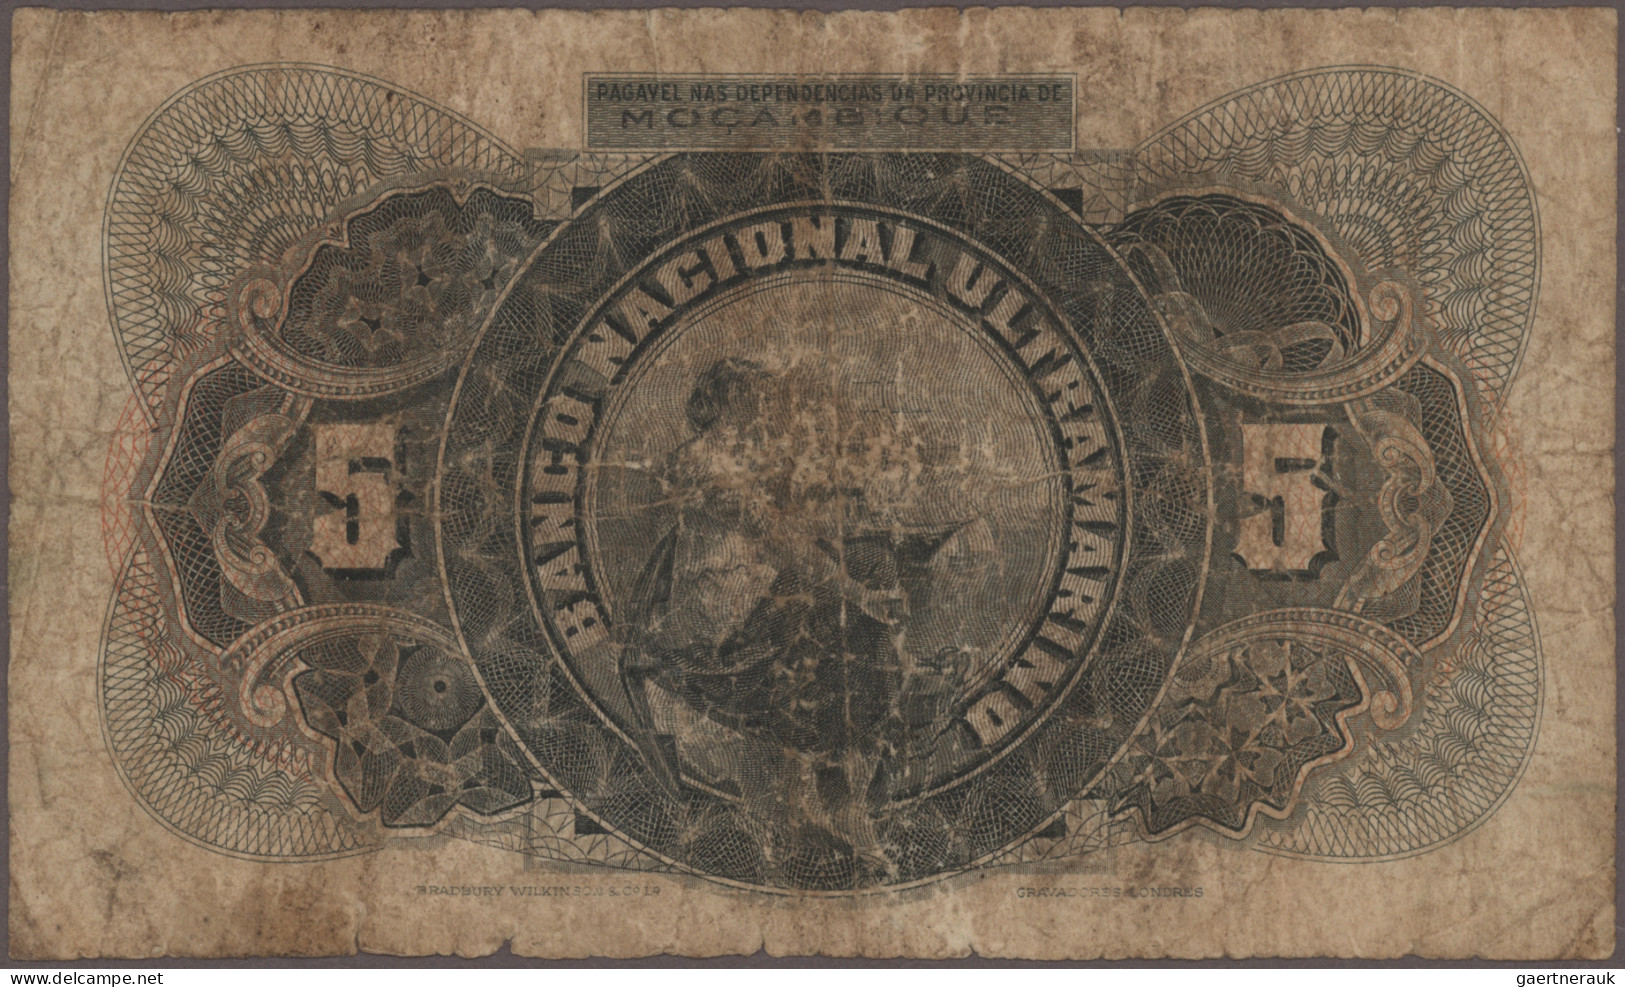 Mozambique: Banco Nacional Ultramarino, lot with 12 banknotes, series 1914-1945,